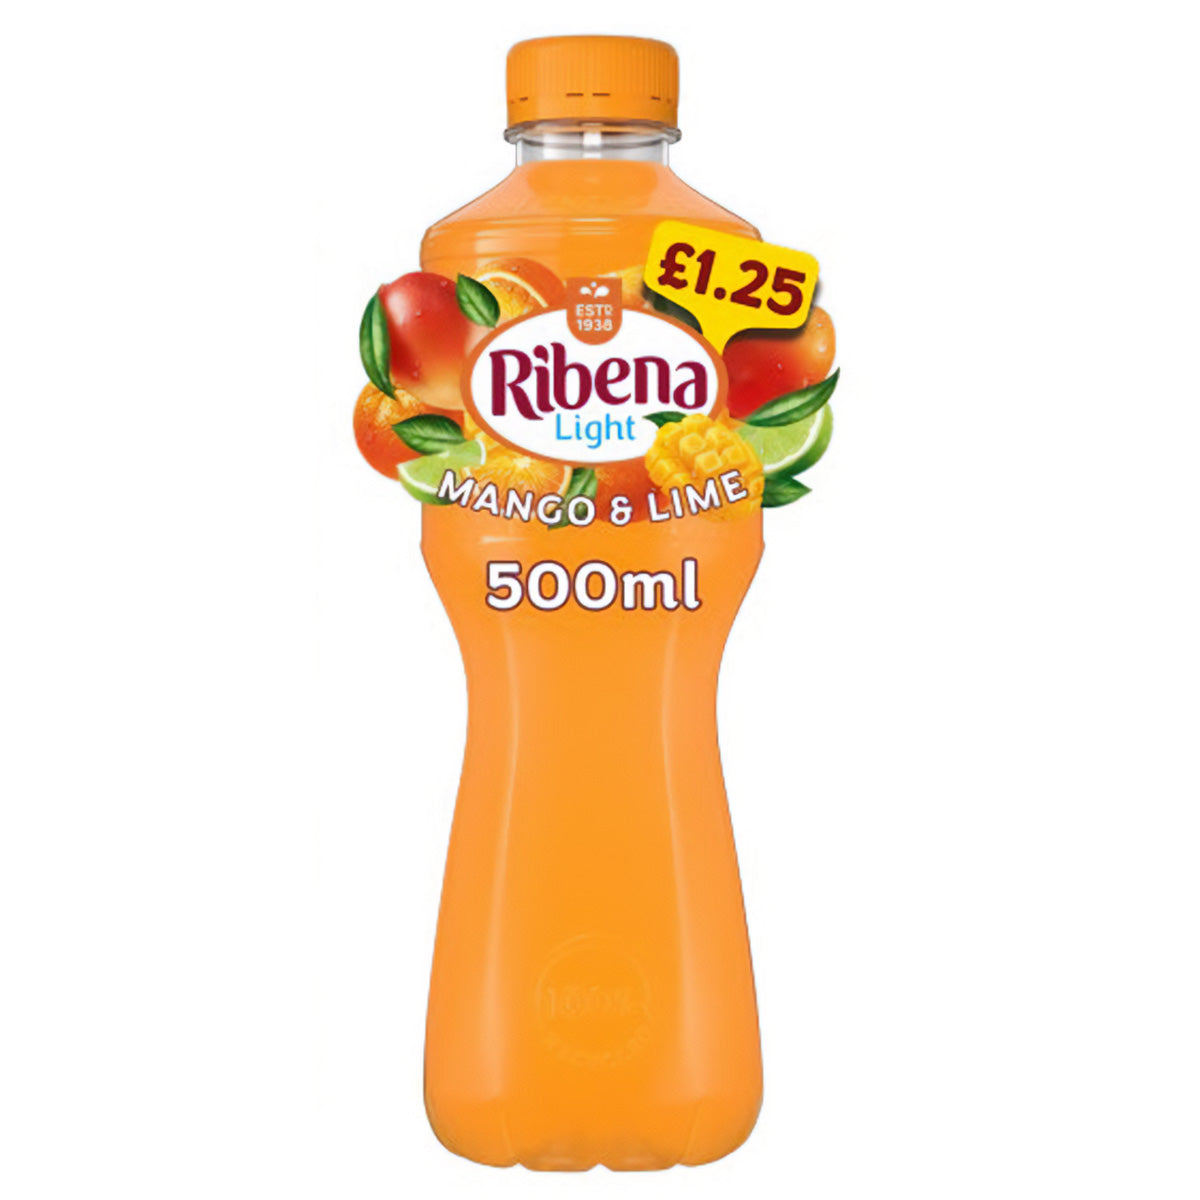 Ribena - Light Mango & Lime Juice Drink - 500ml.